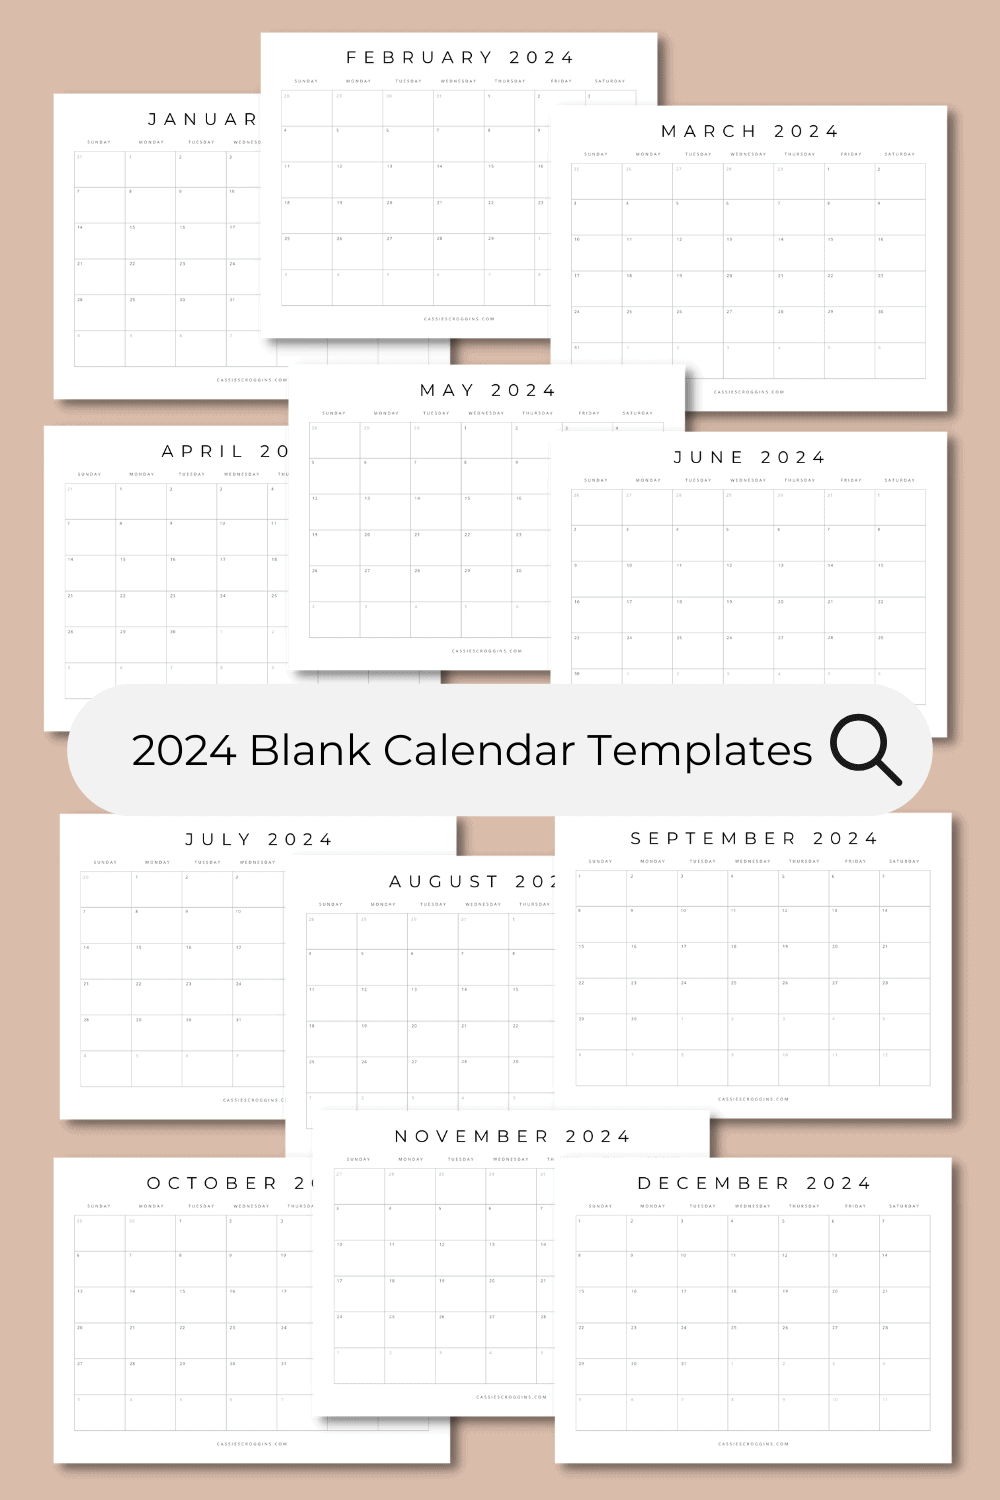 Free Printable 2024 Blank Calendar Templates (All 12 Months) | Printable Calendar 2024 Free Blank